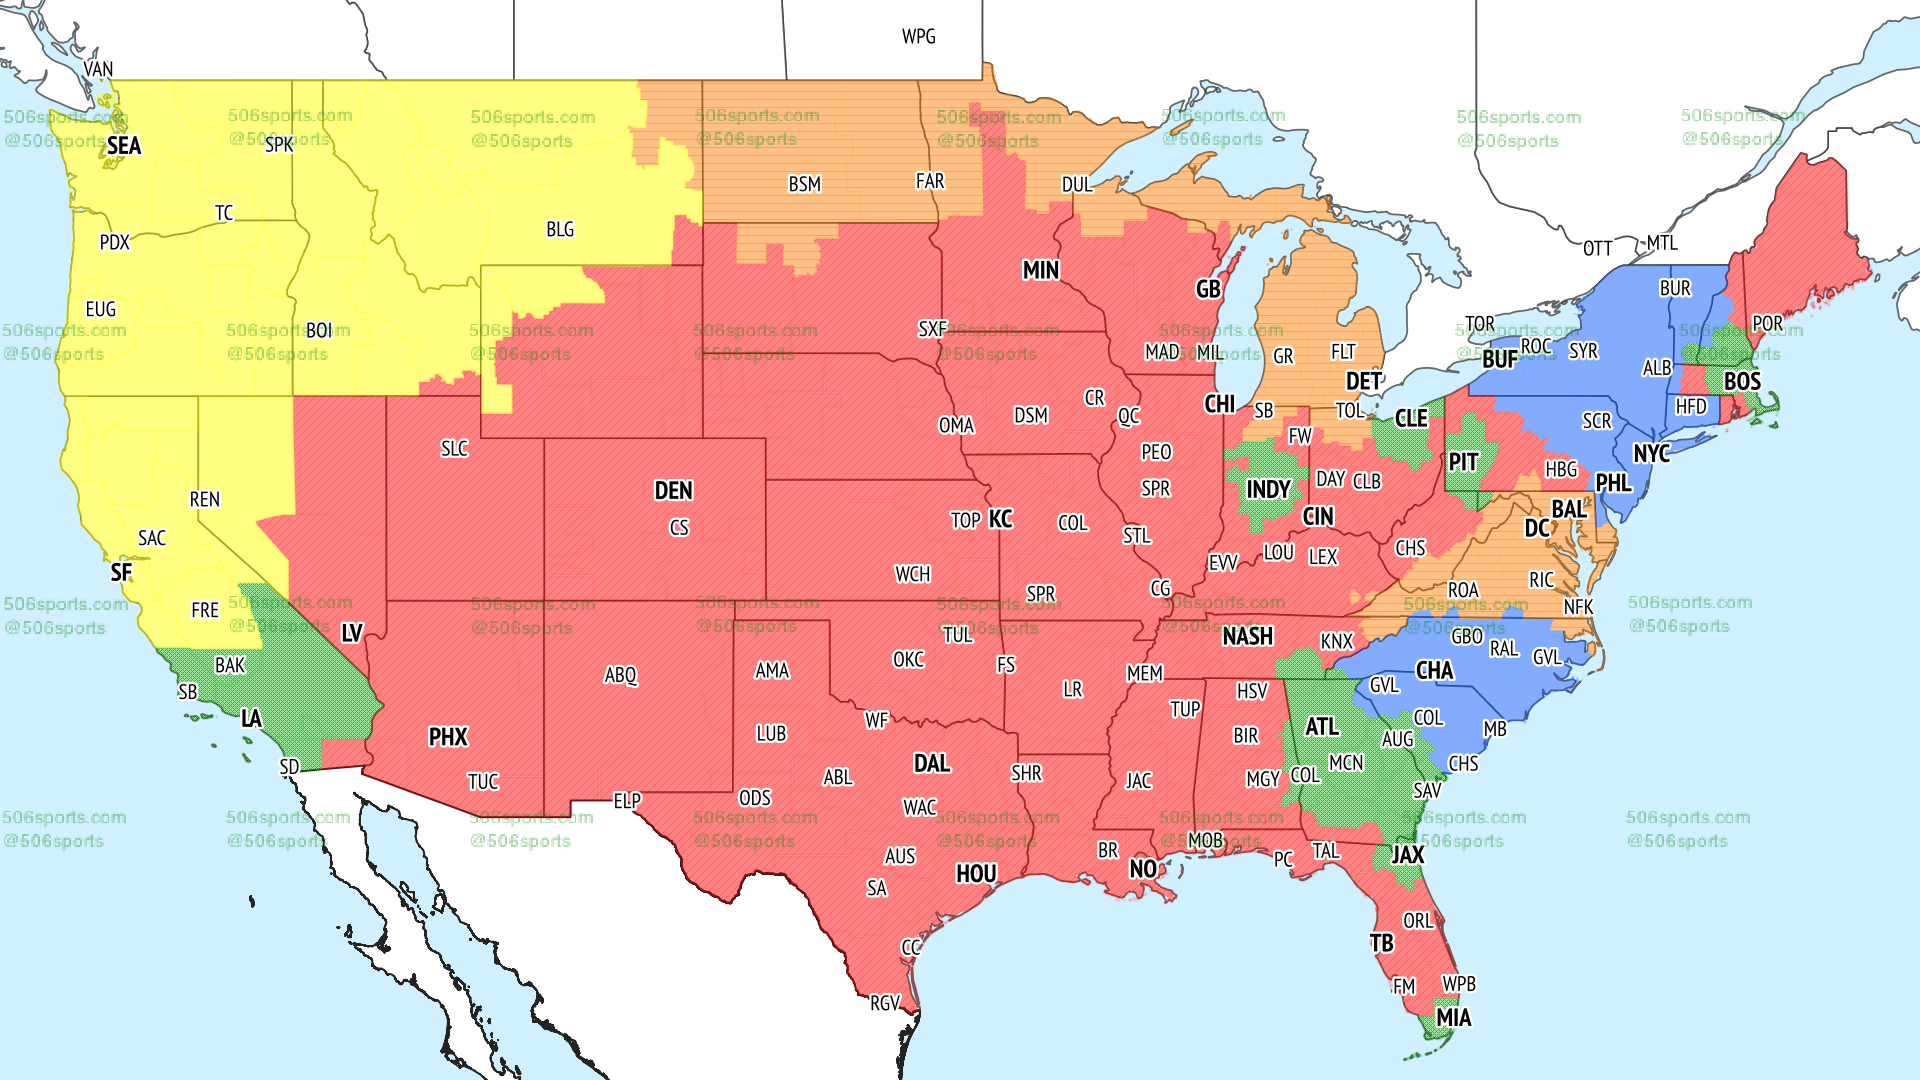 NFL coverage map of single FOX games in Week 2